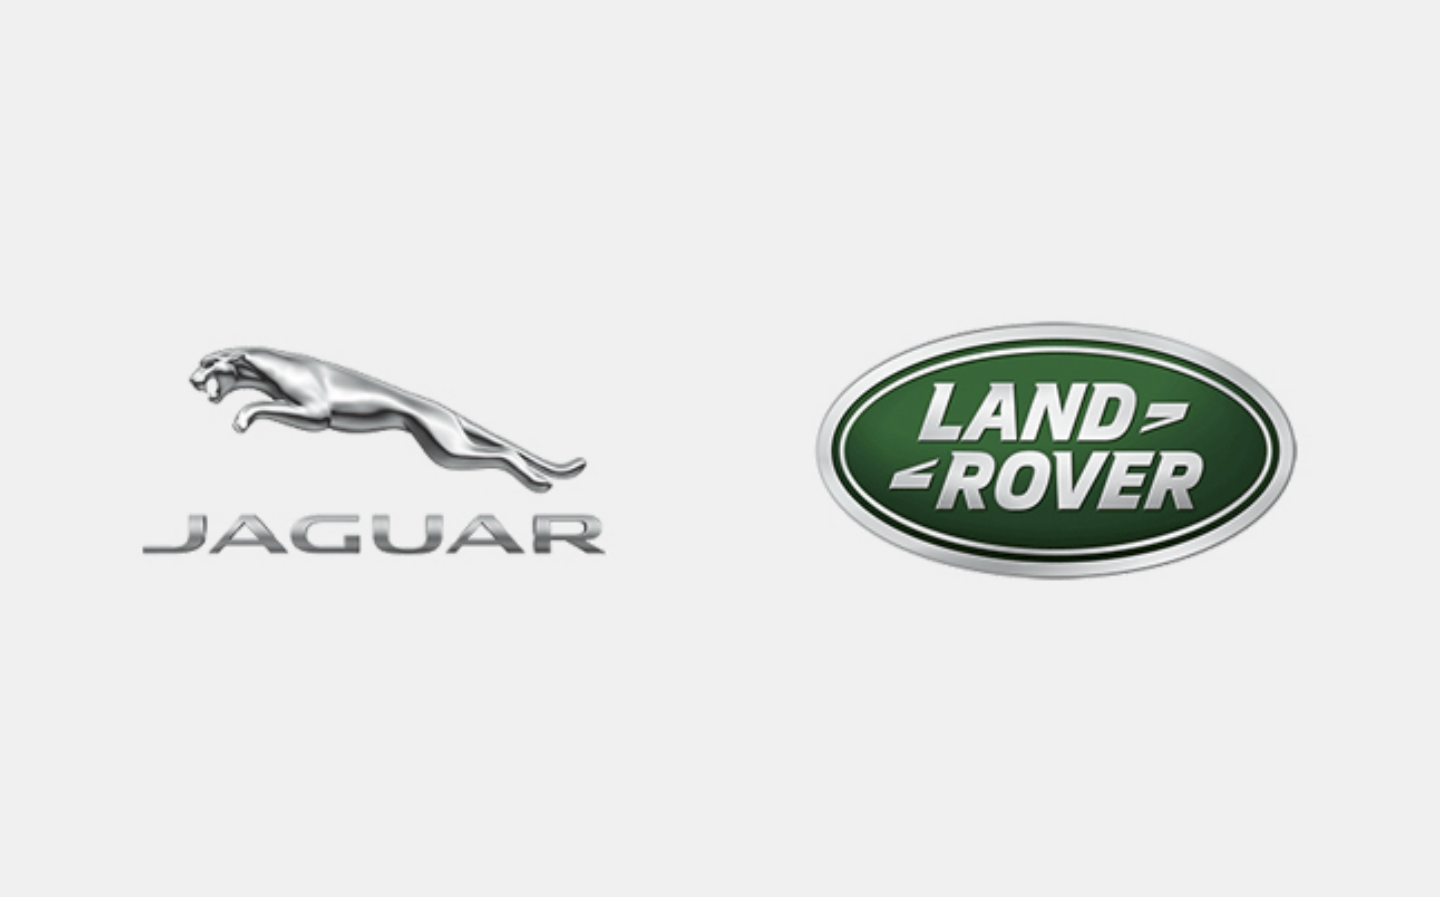 Sunday Times Motor Awards 2019 Best Car Manufacturer of the Year. Jaguar Land Rover